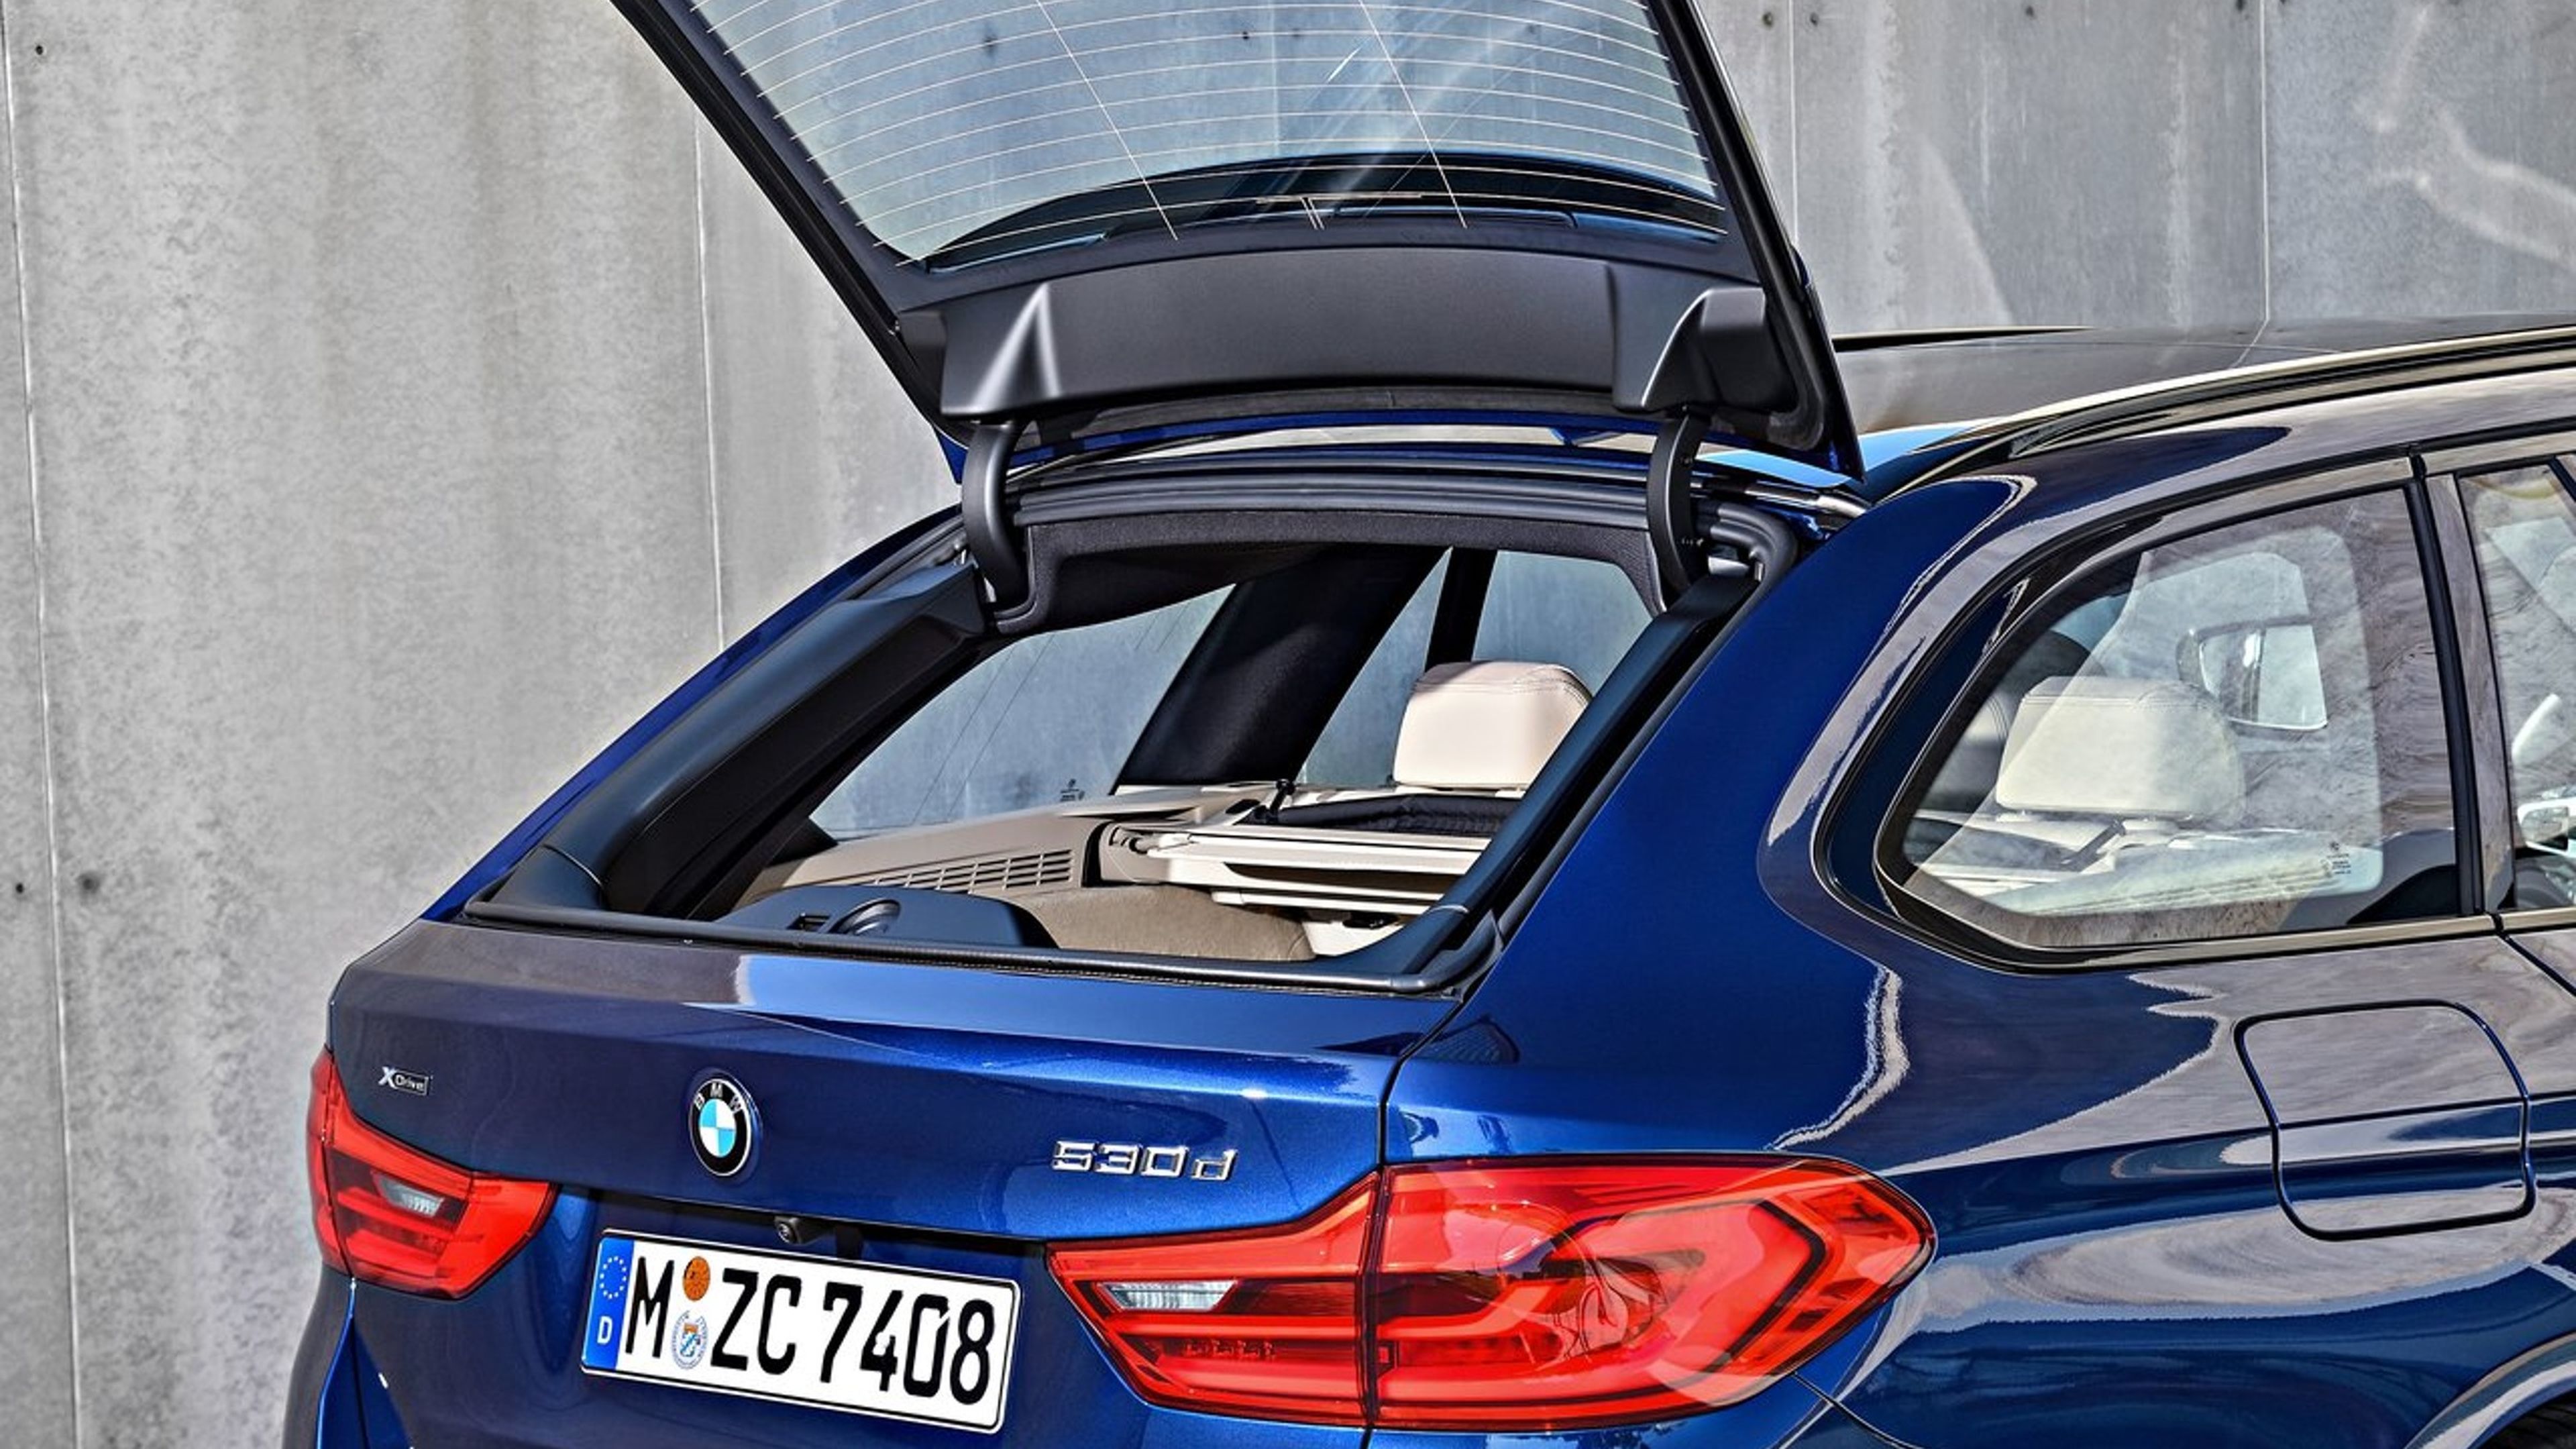 BMW elimita este práctio elemento del Serie 5 Touring, la luneta trasera independiente